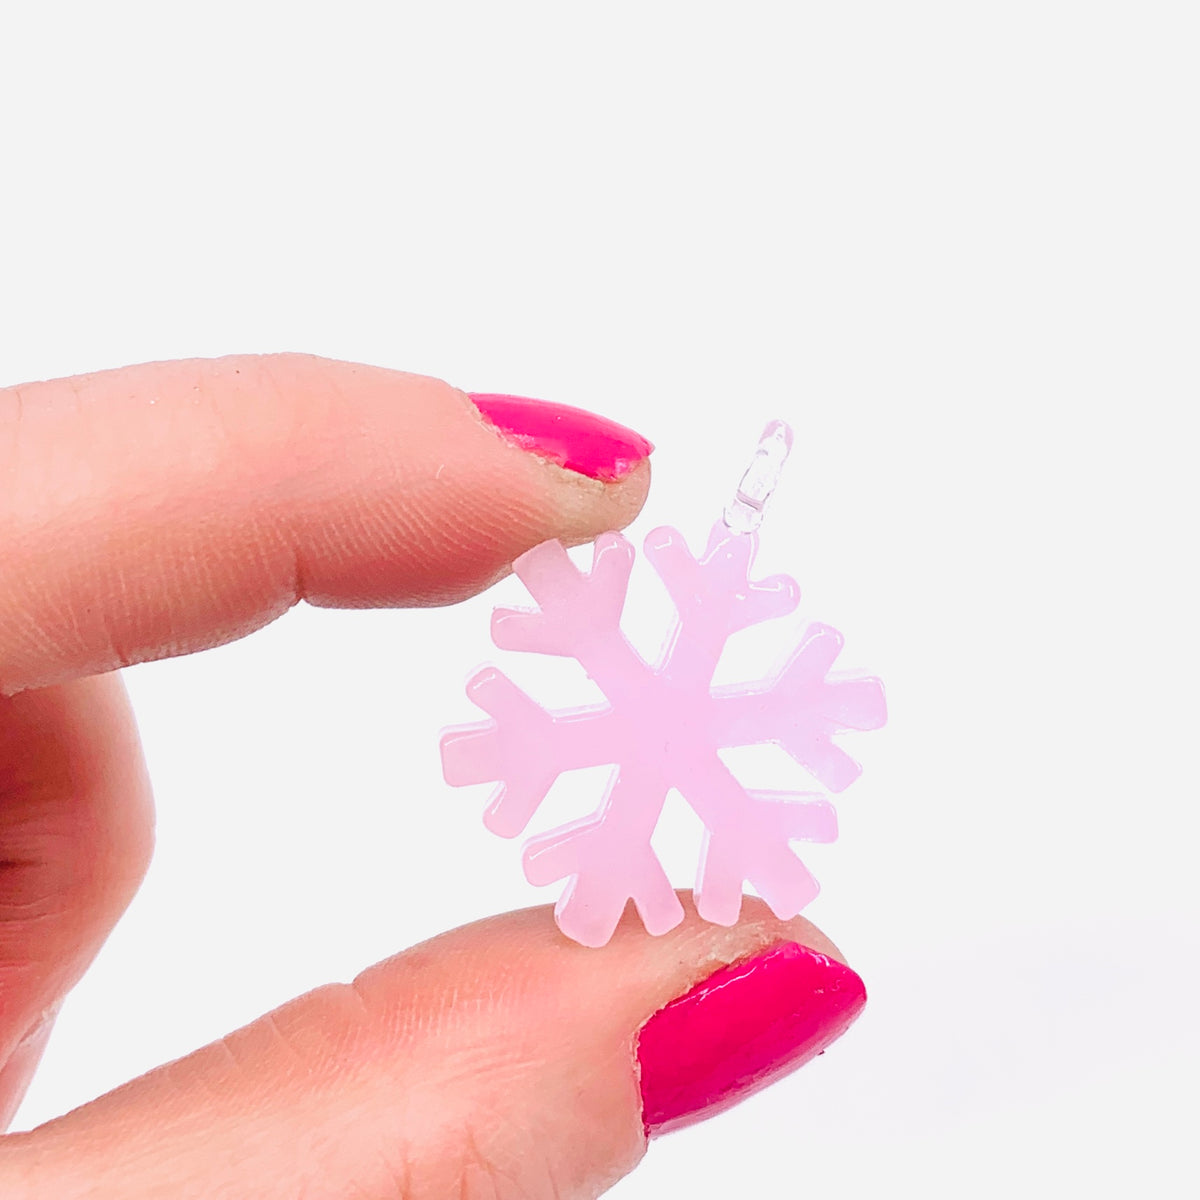 Tiny Glass Snowflake Ornament